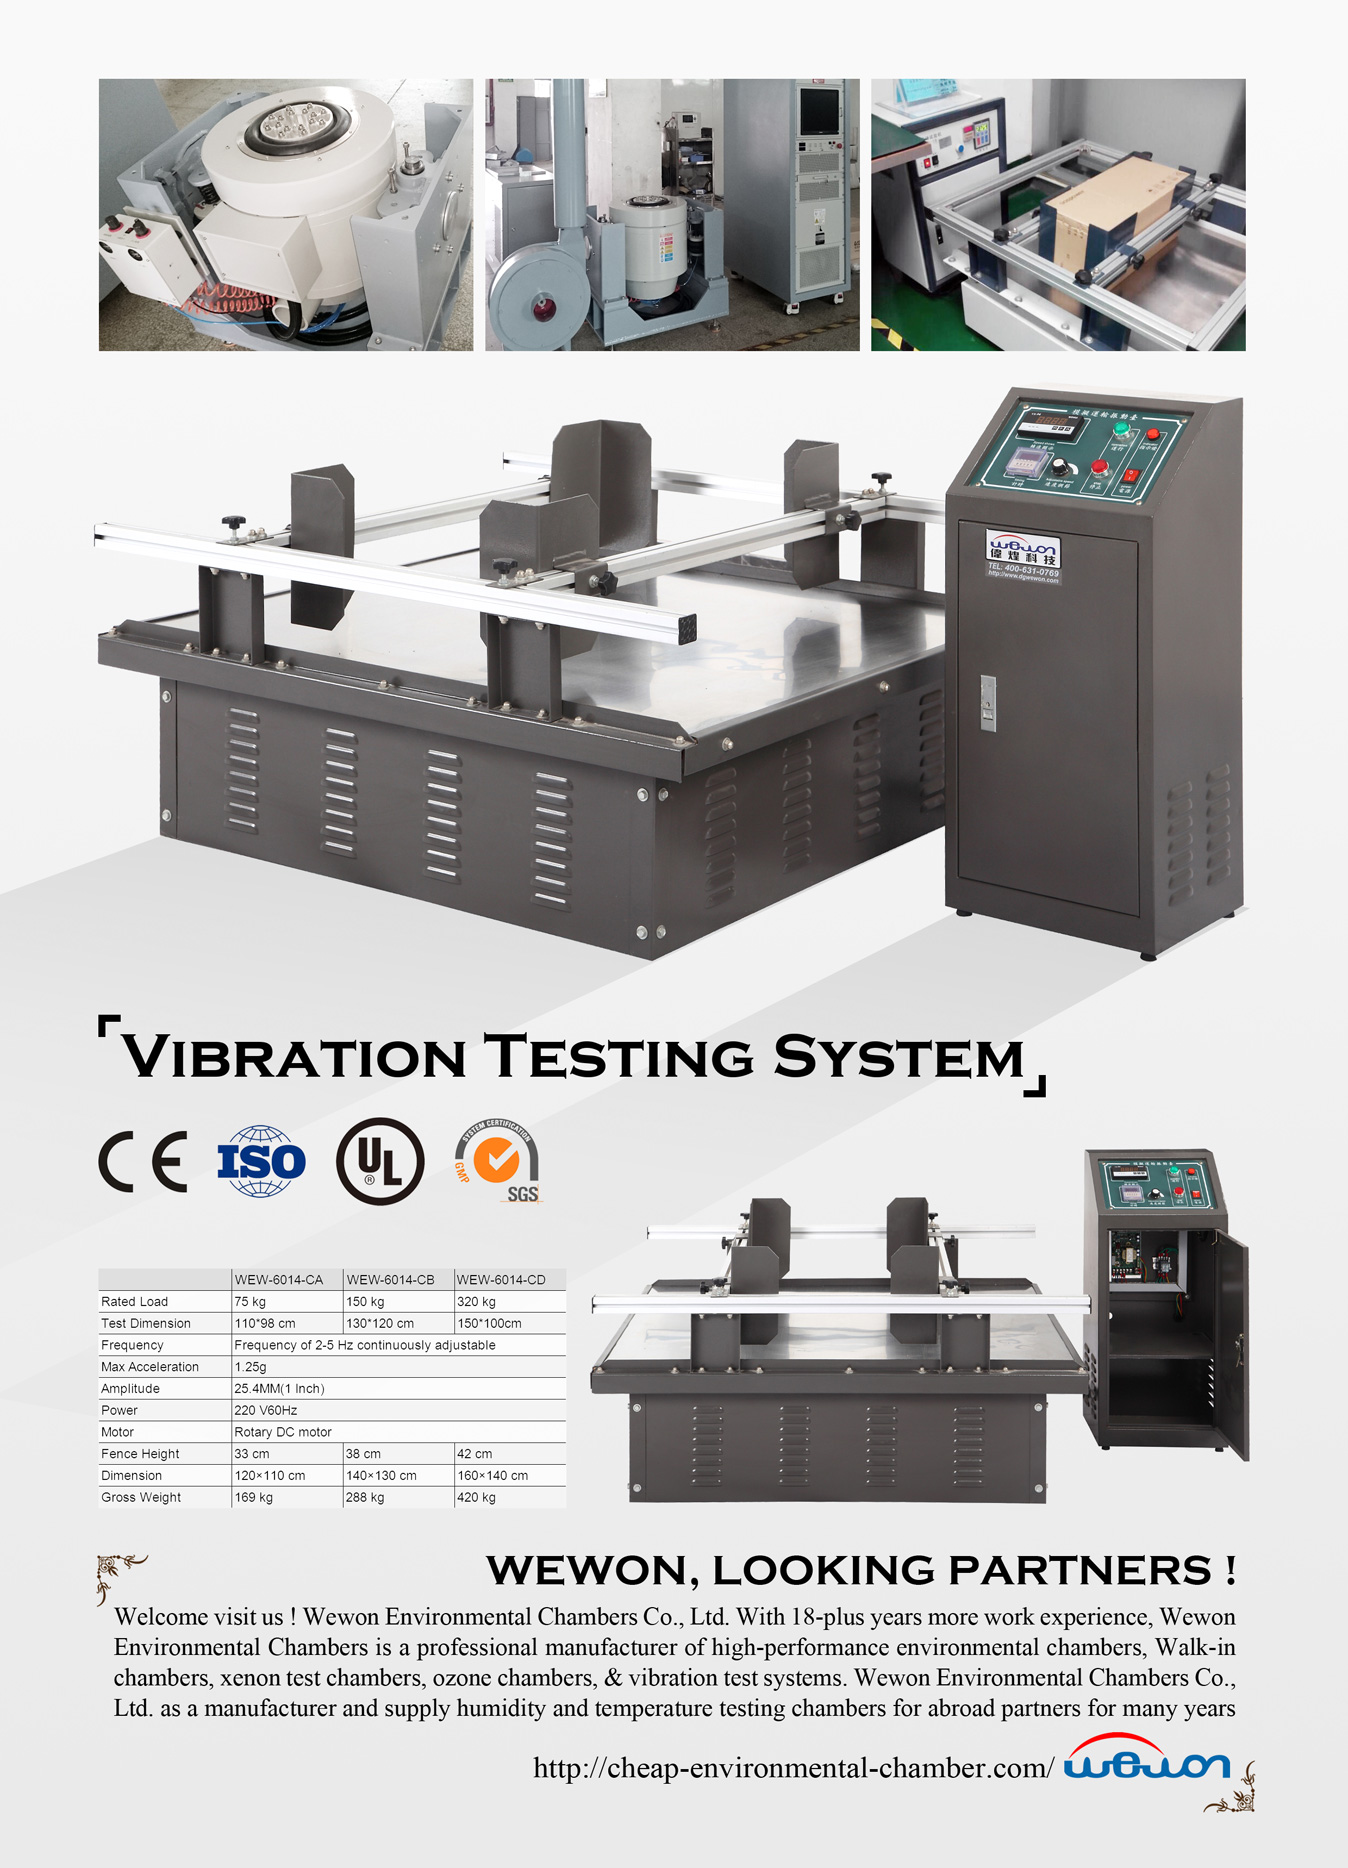 Vibration Testing Equipment | Wewon Environmental Chambers Co., Ltd.